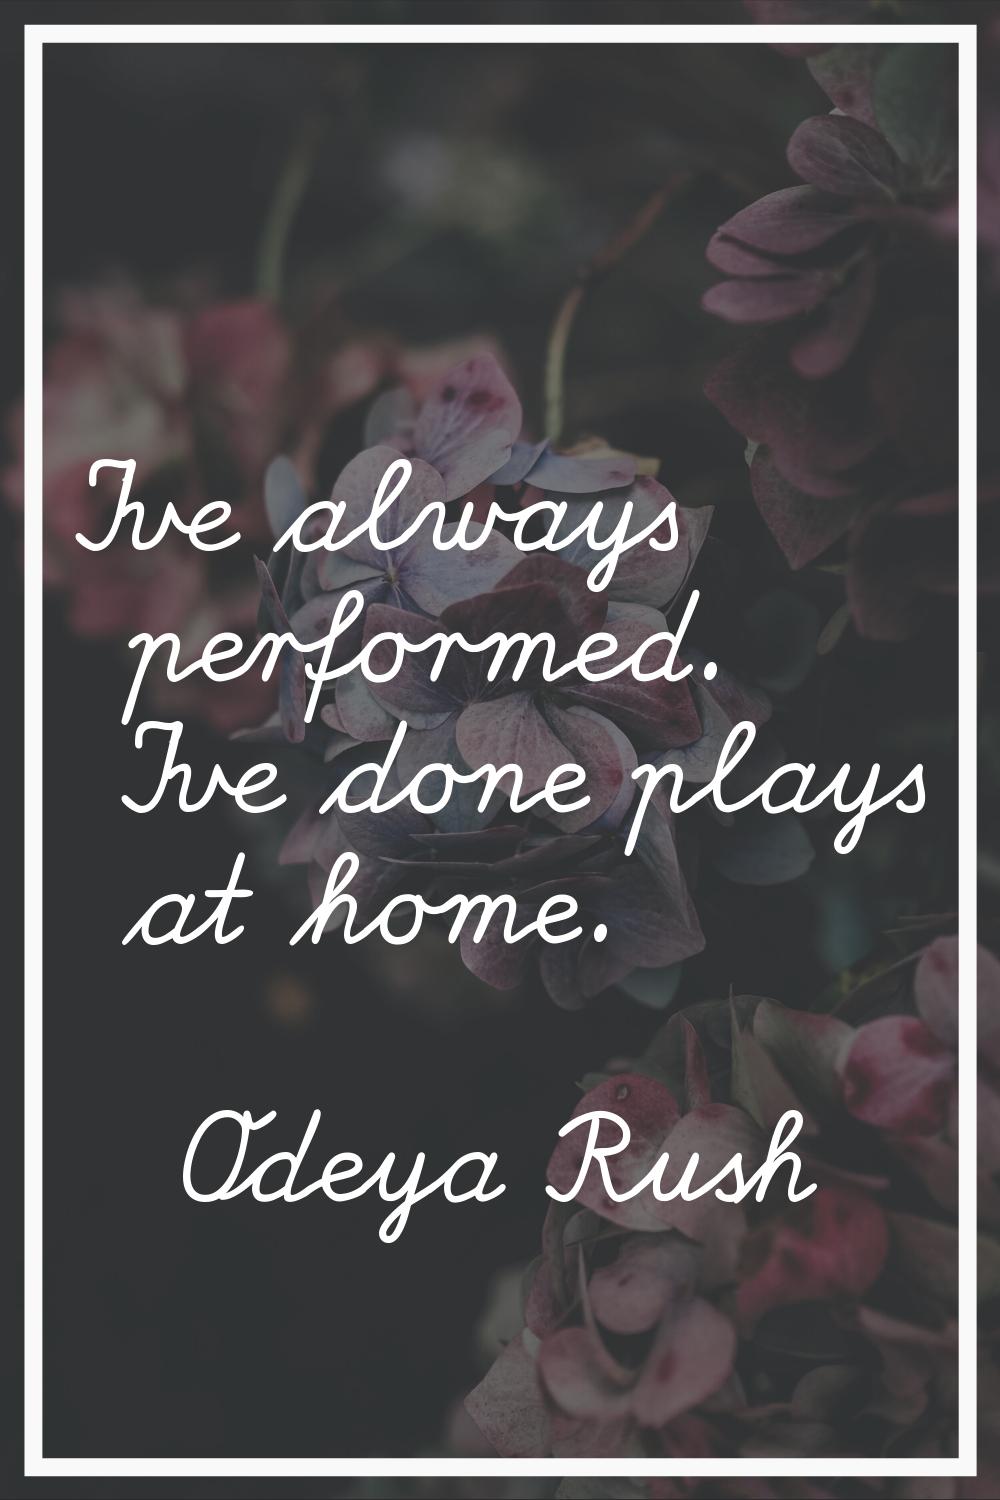 I've always performed. I've done plays at home.